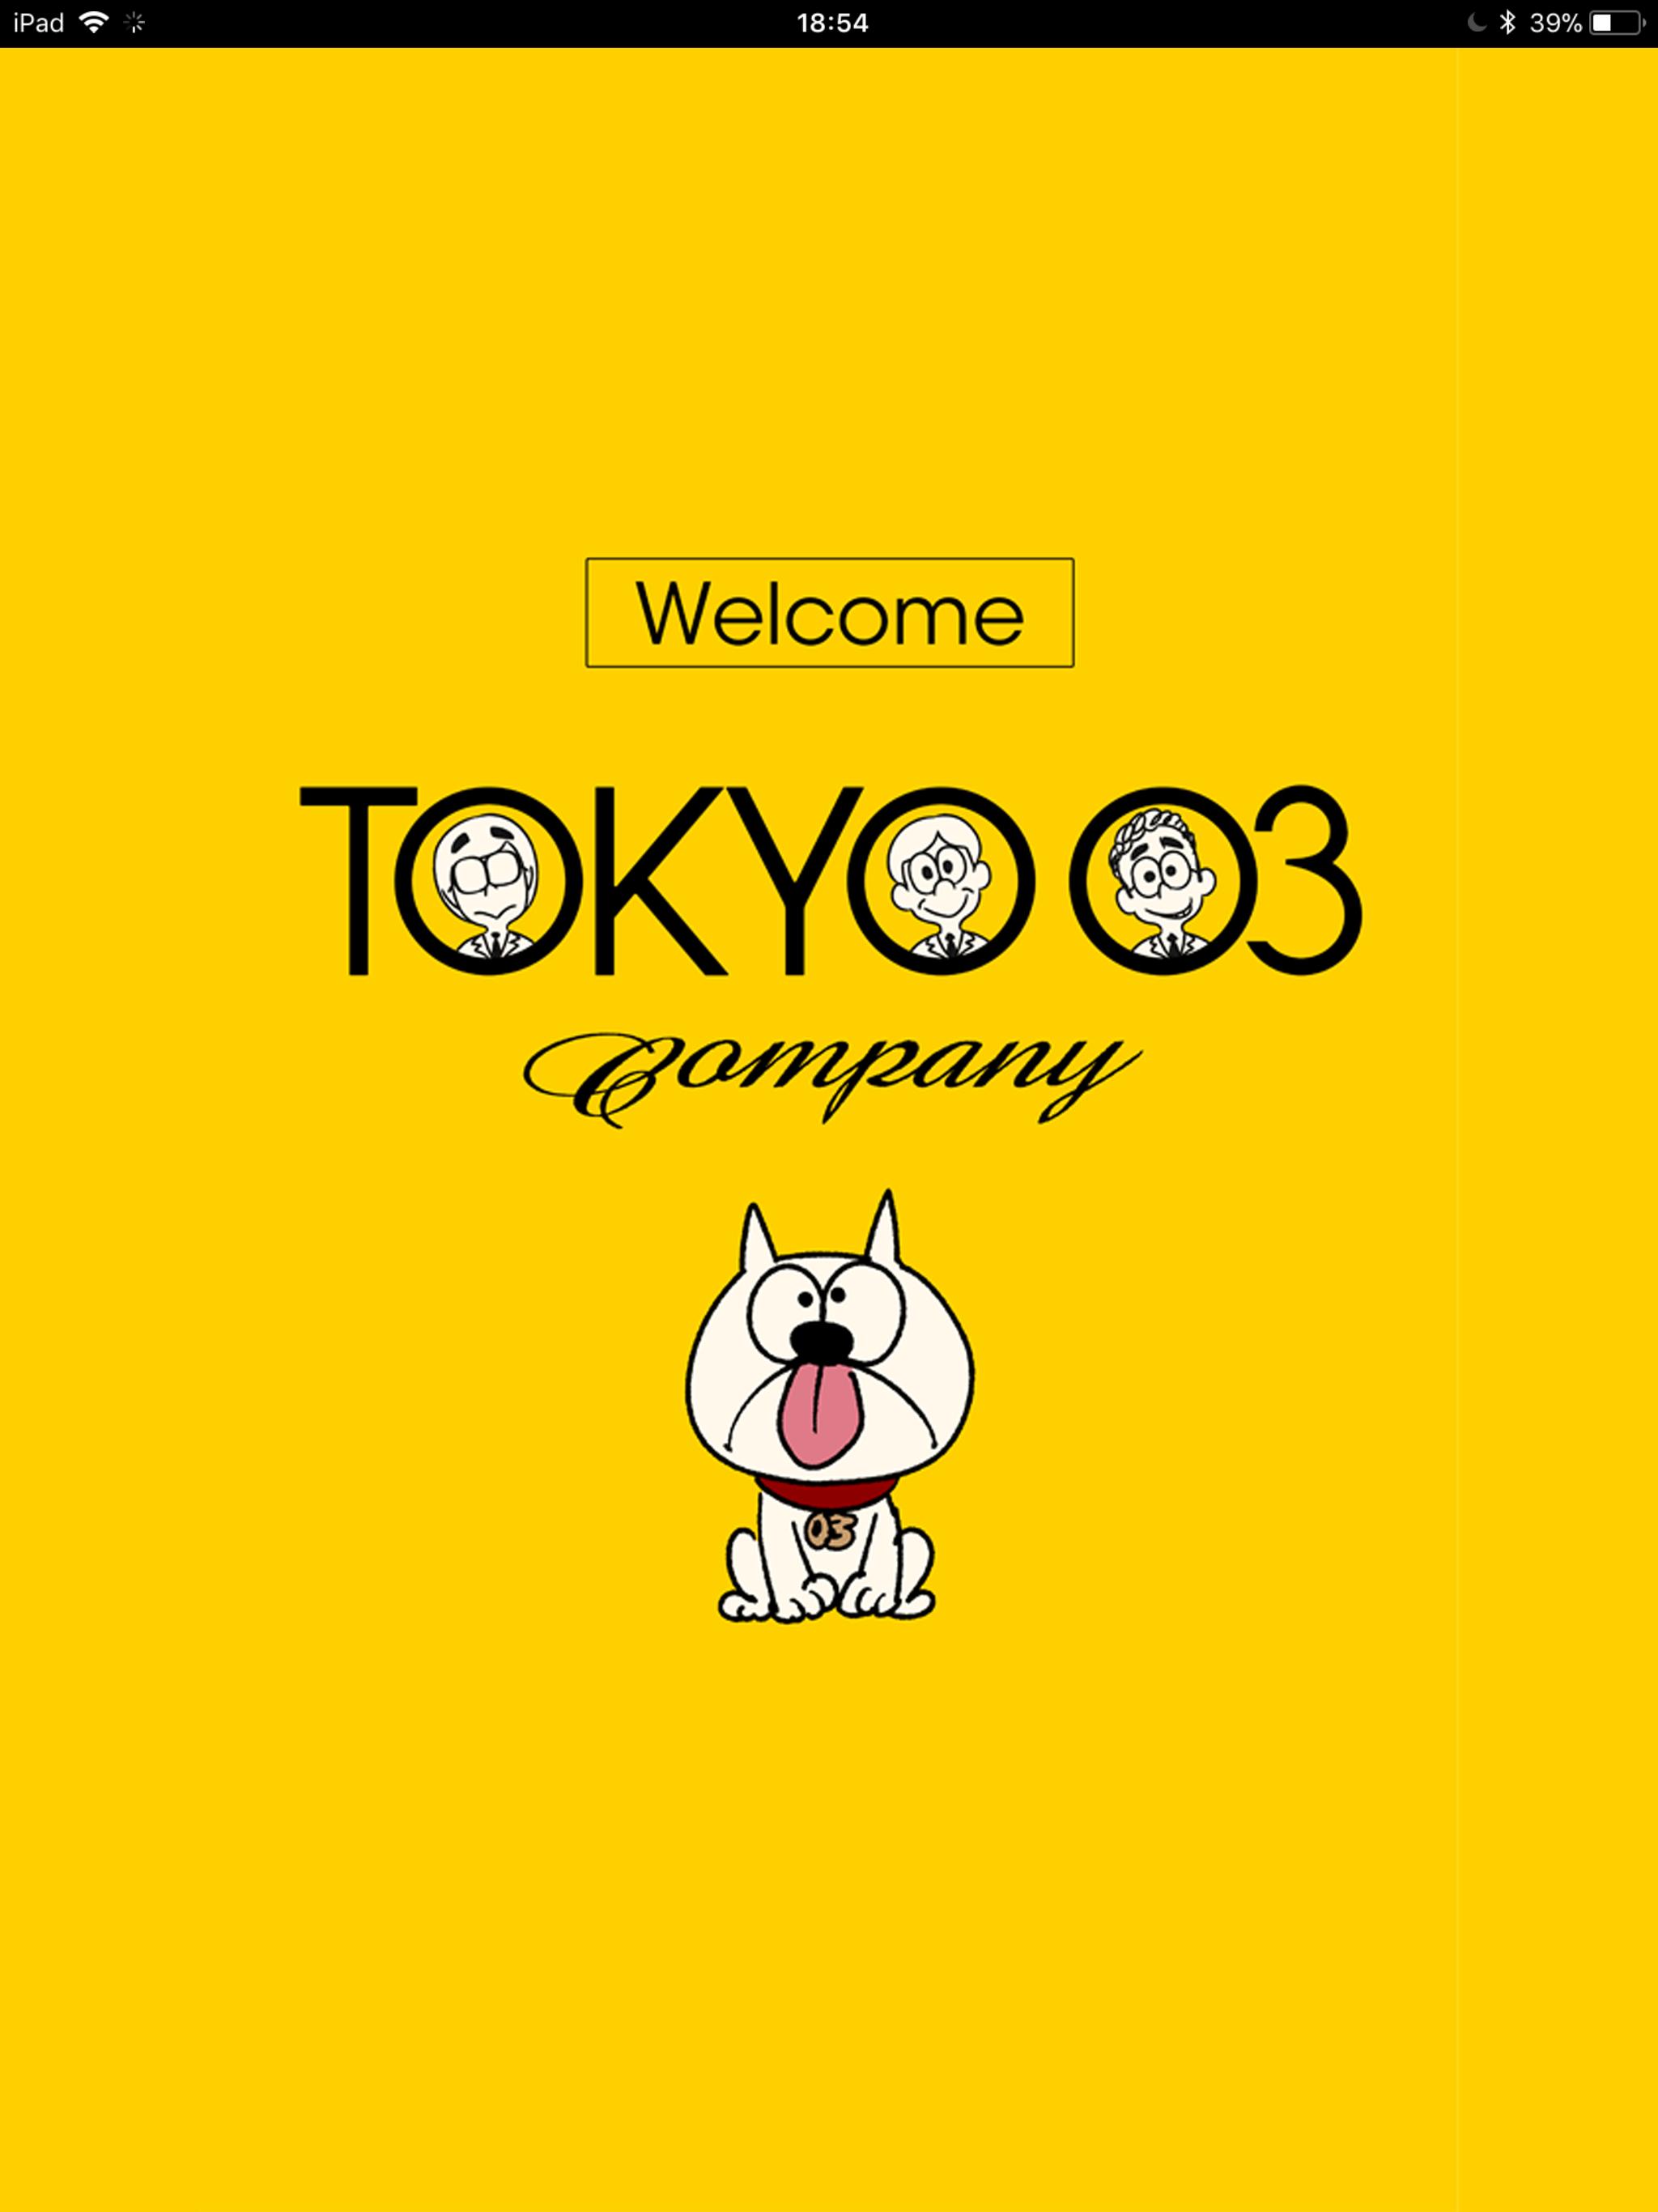 TOKYO 03 Company 3.0.30 Screenshot 11